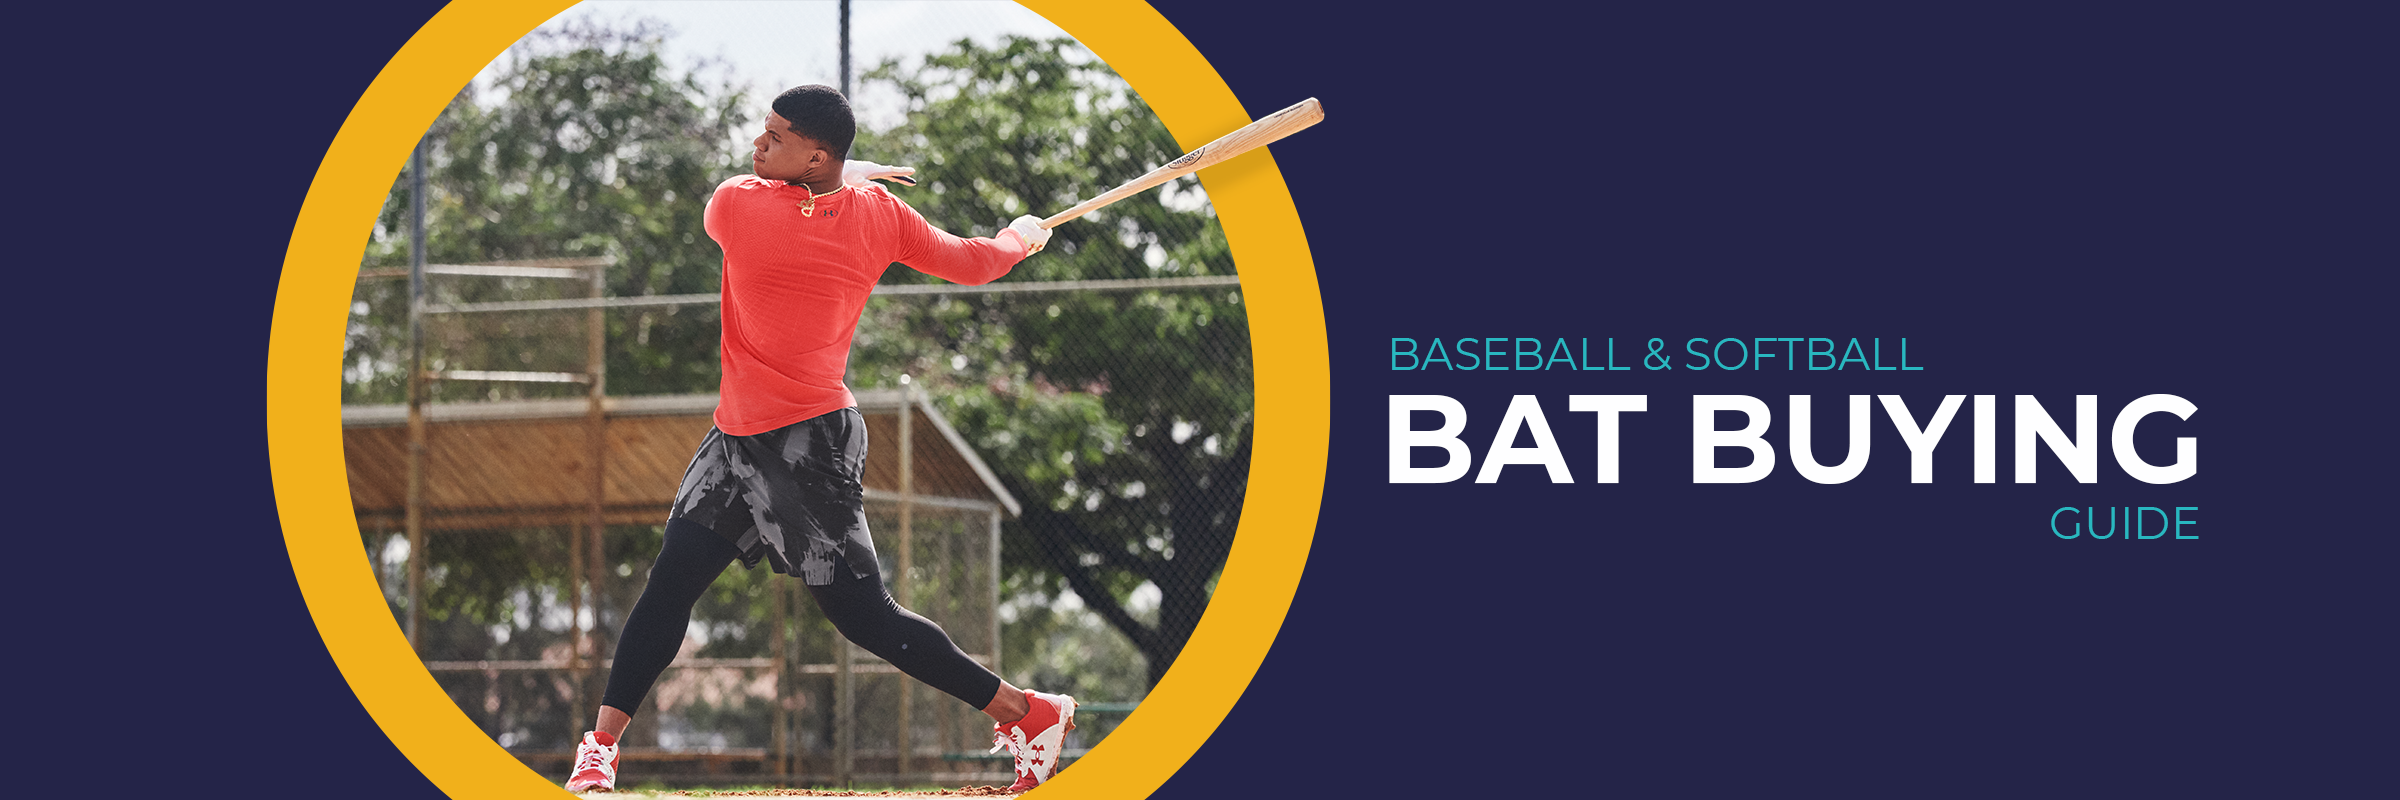 Baseball and Softball Bat Buying Guide